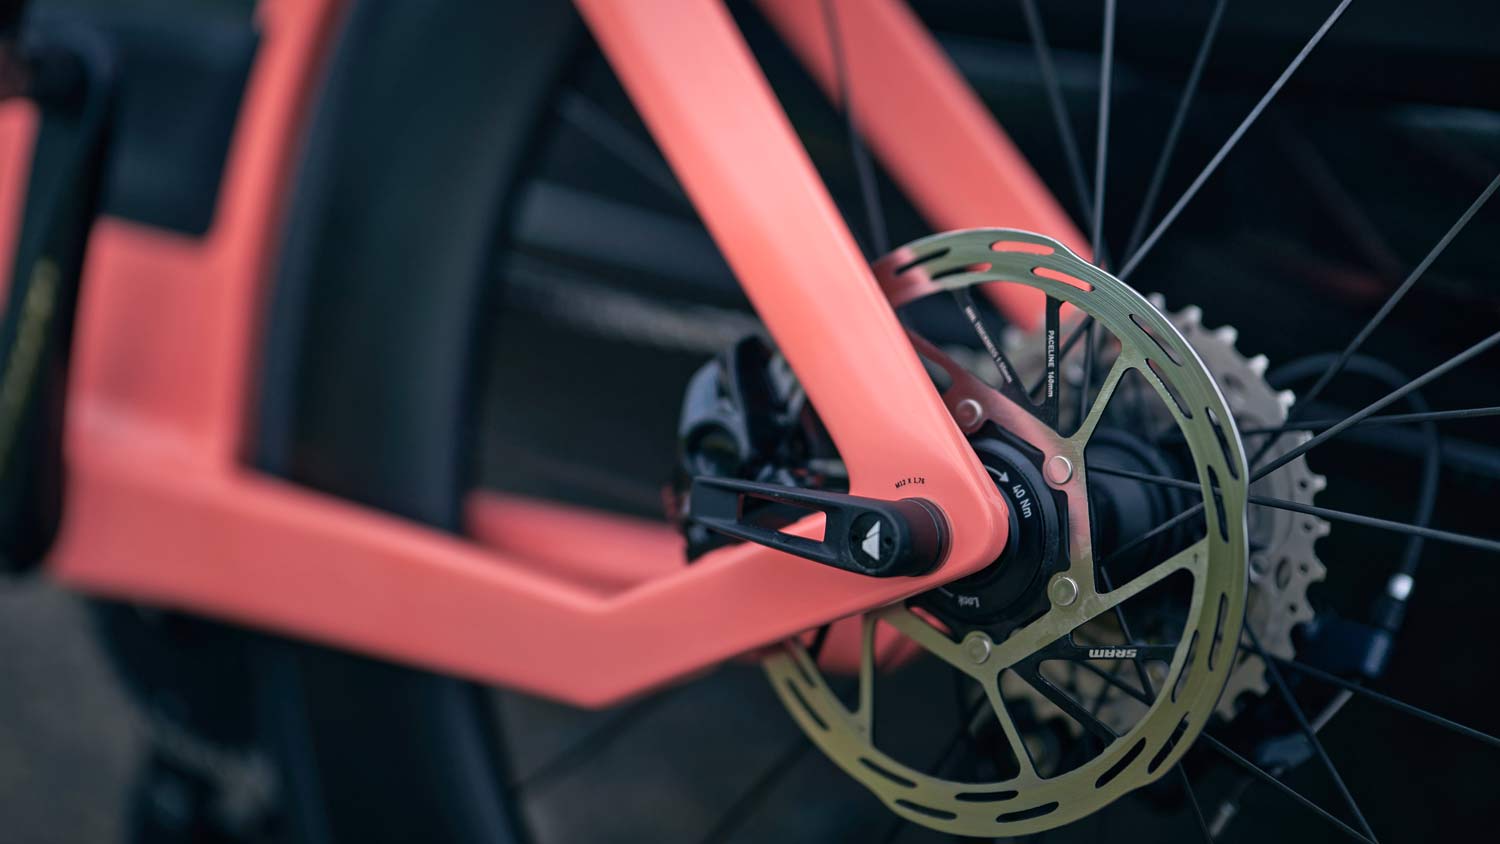 2021 Canyon Speedmax Disc triathlon bike, lightweight race-ready disc brake aero tri bike, flat mount disc brakes